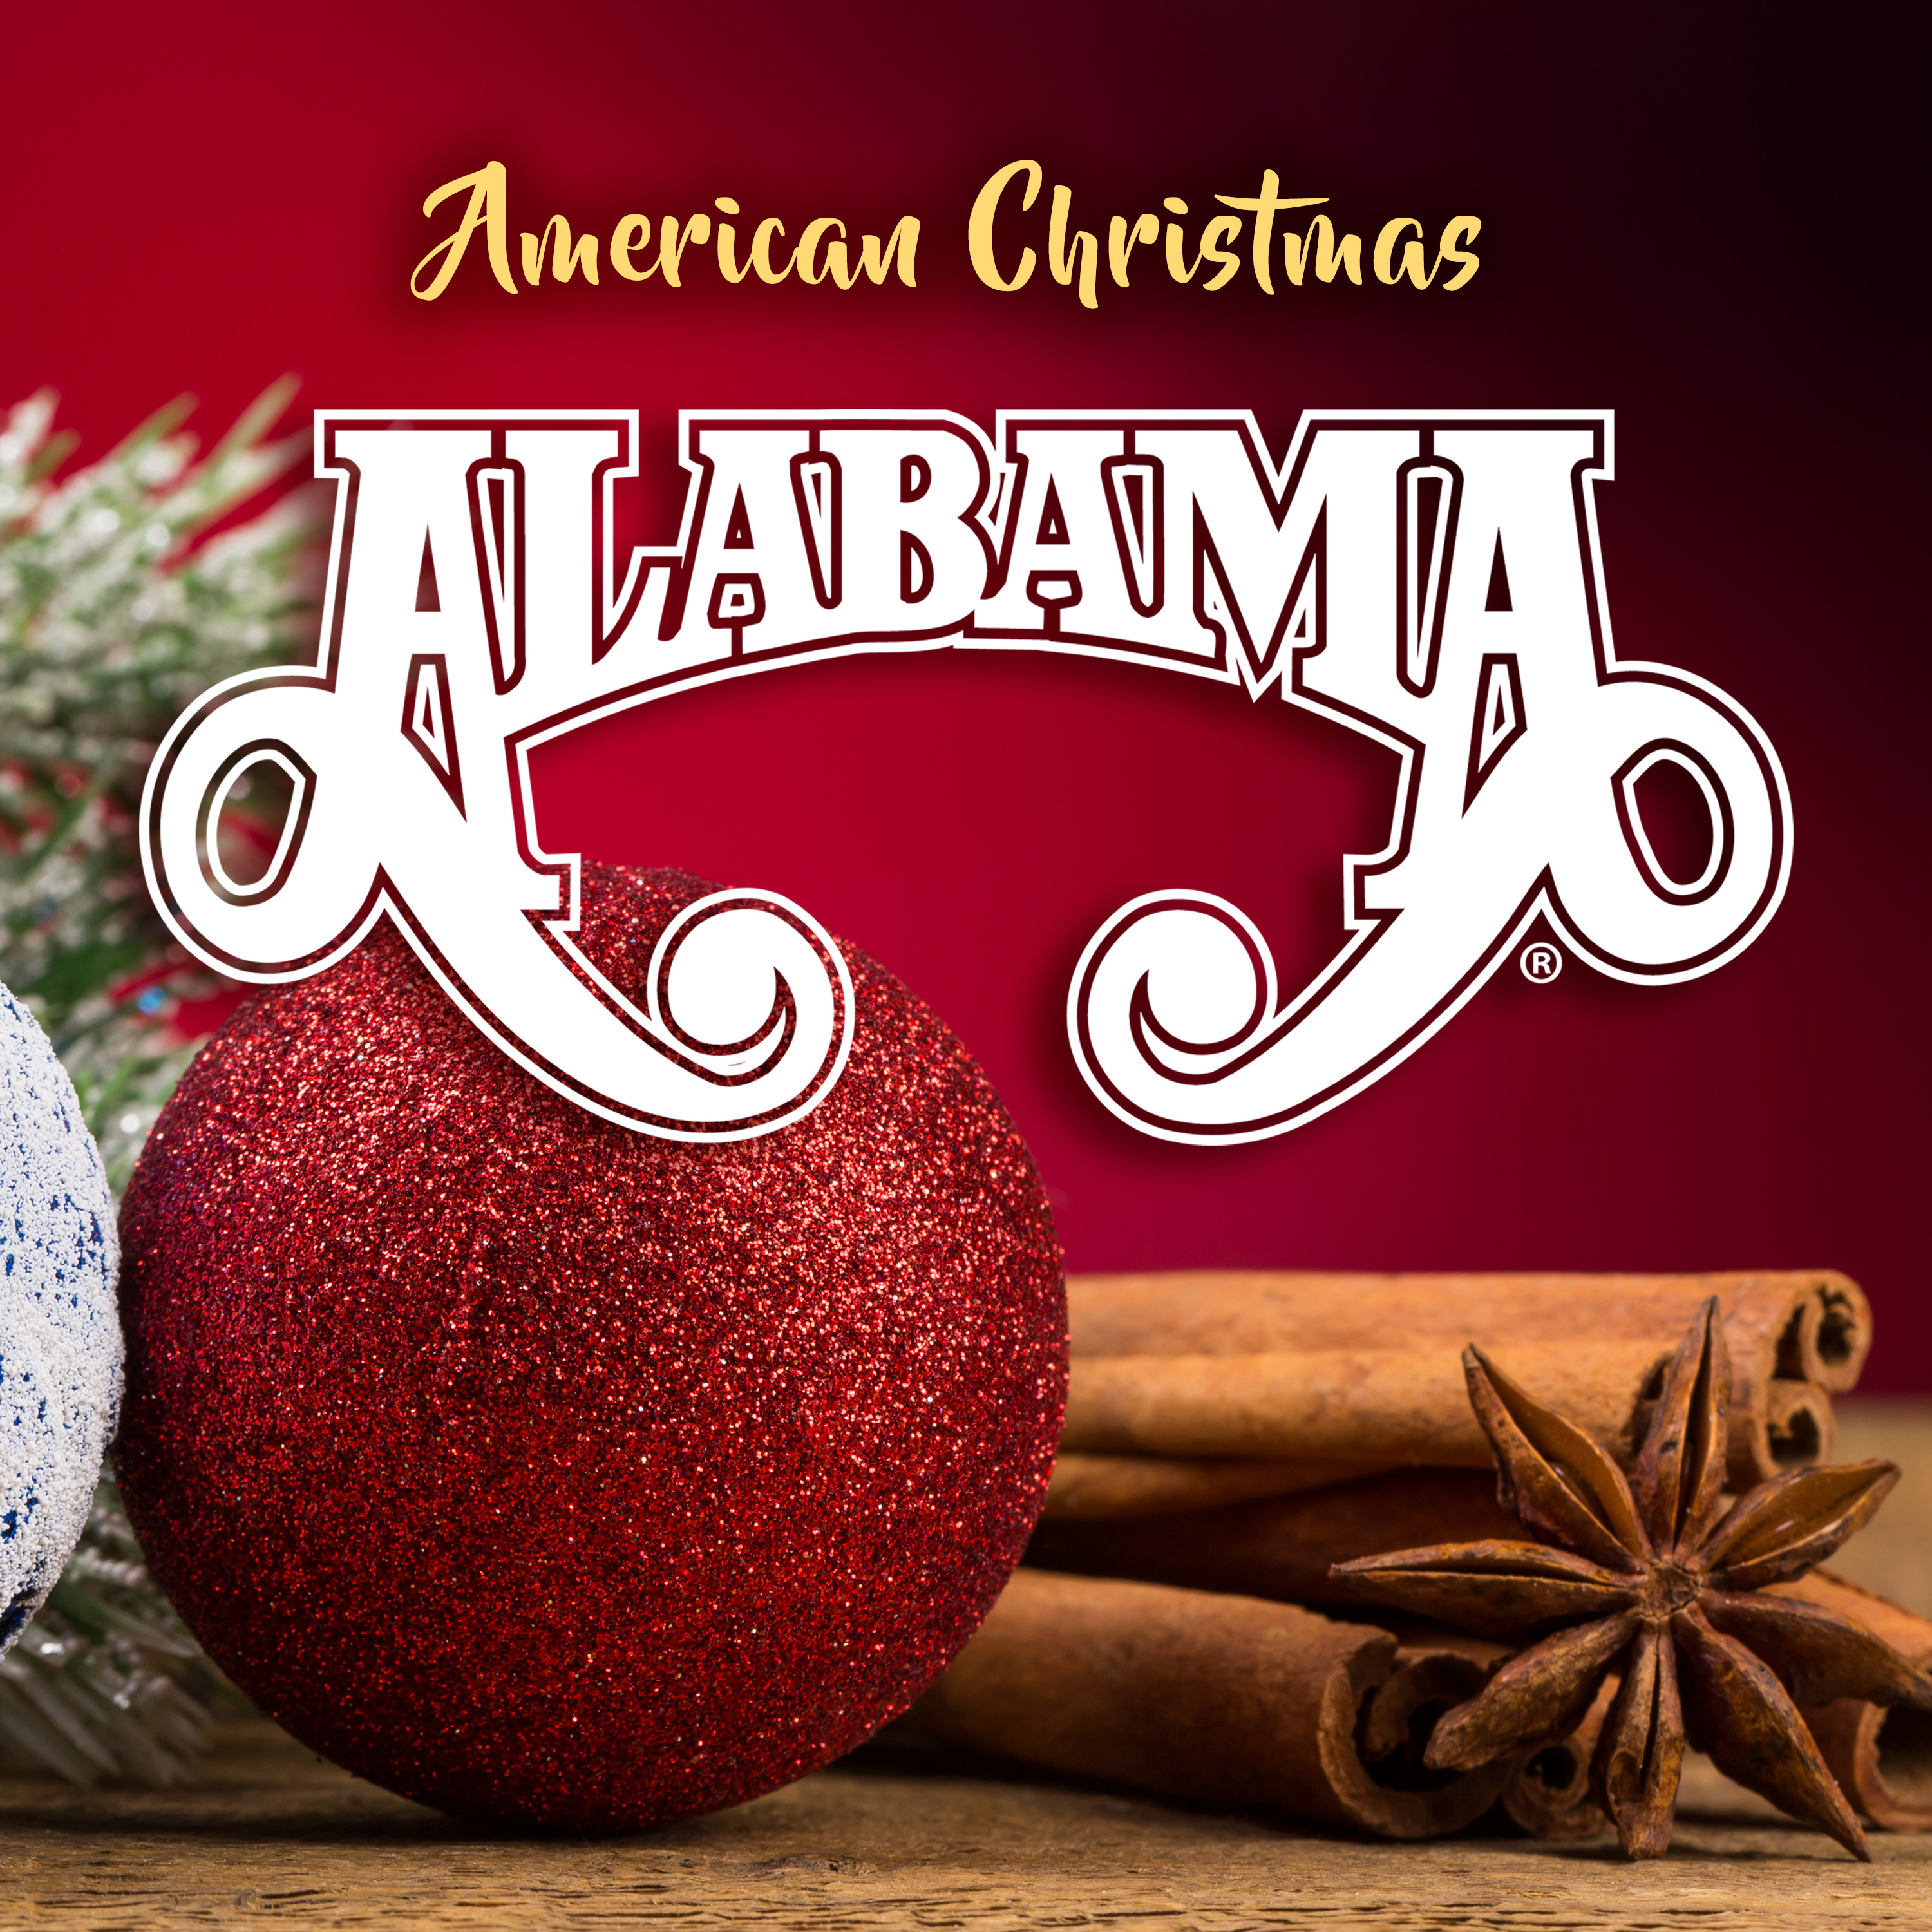 Alabama - American Christmas; Photo courtesy BMG